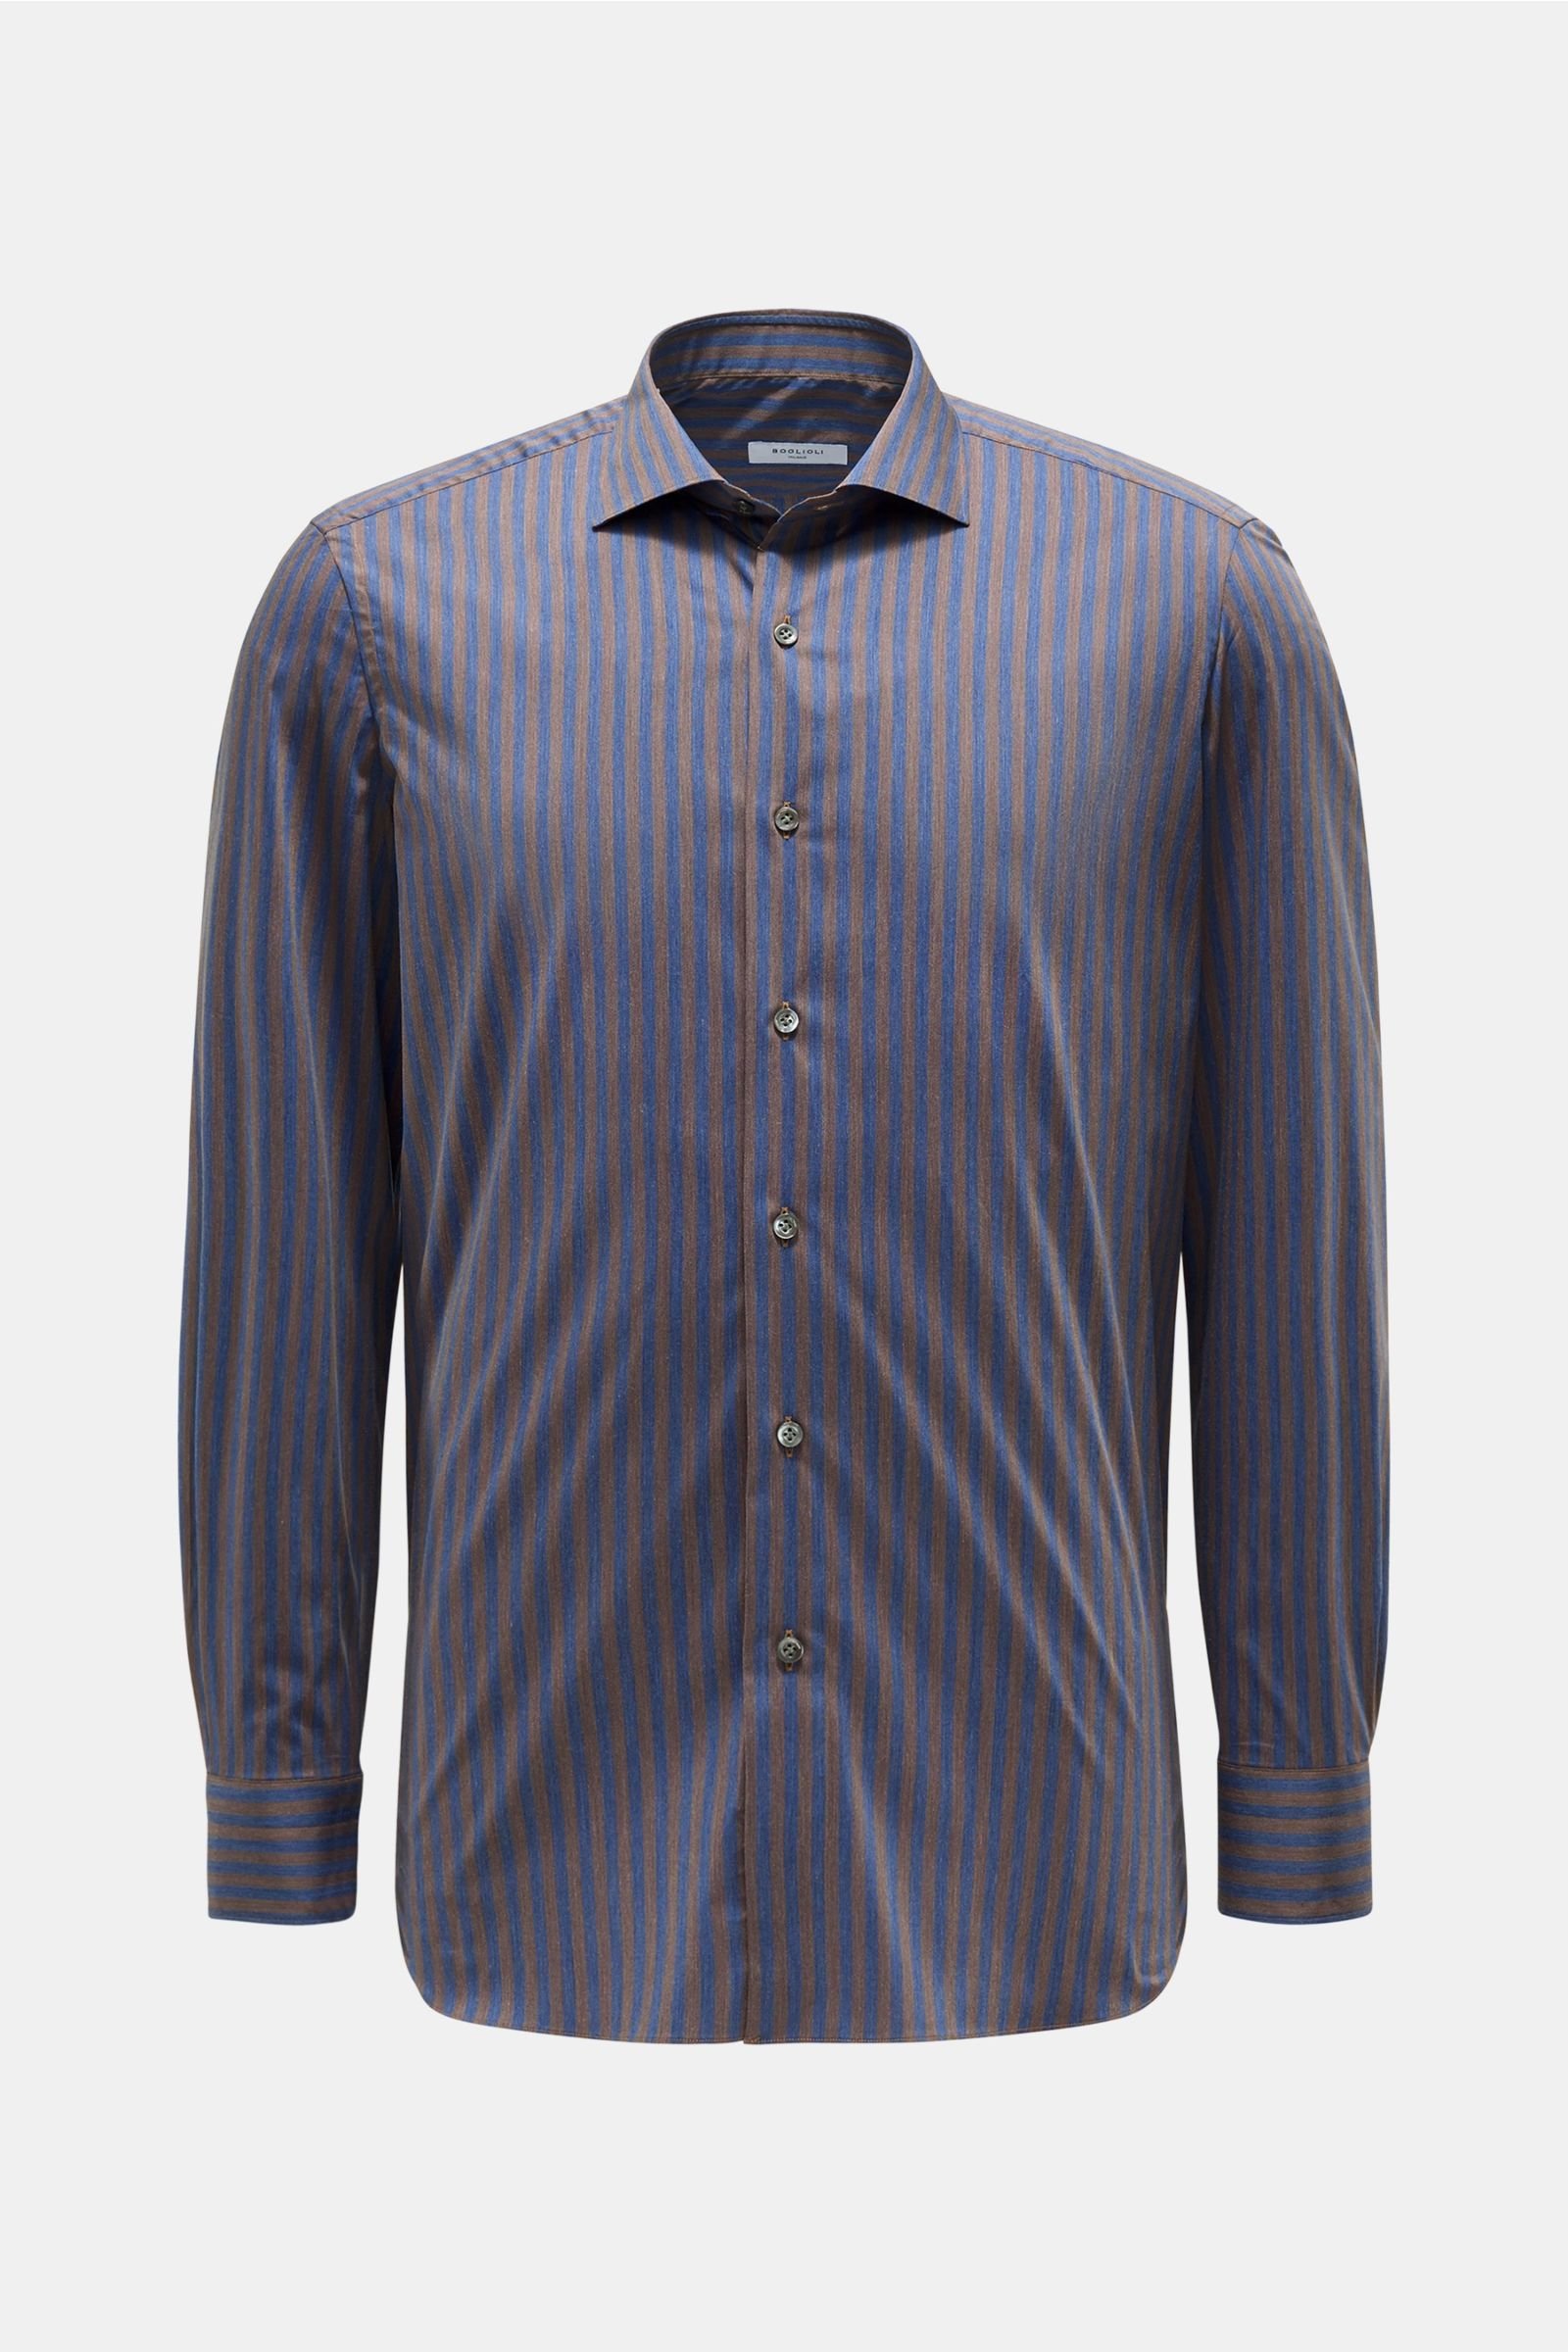 Casual shirt shark collar grey-blue/grey-brown striped